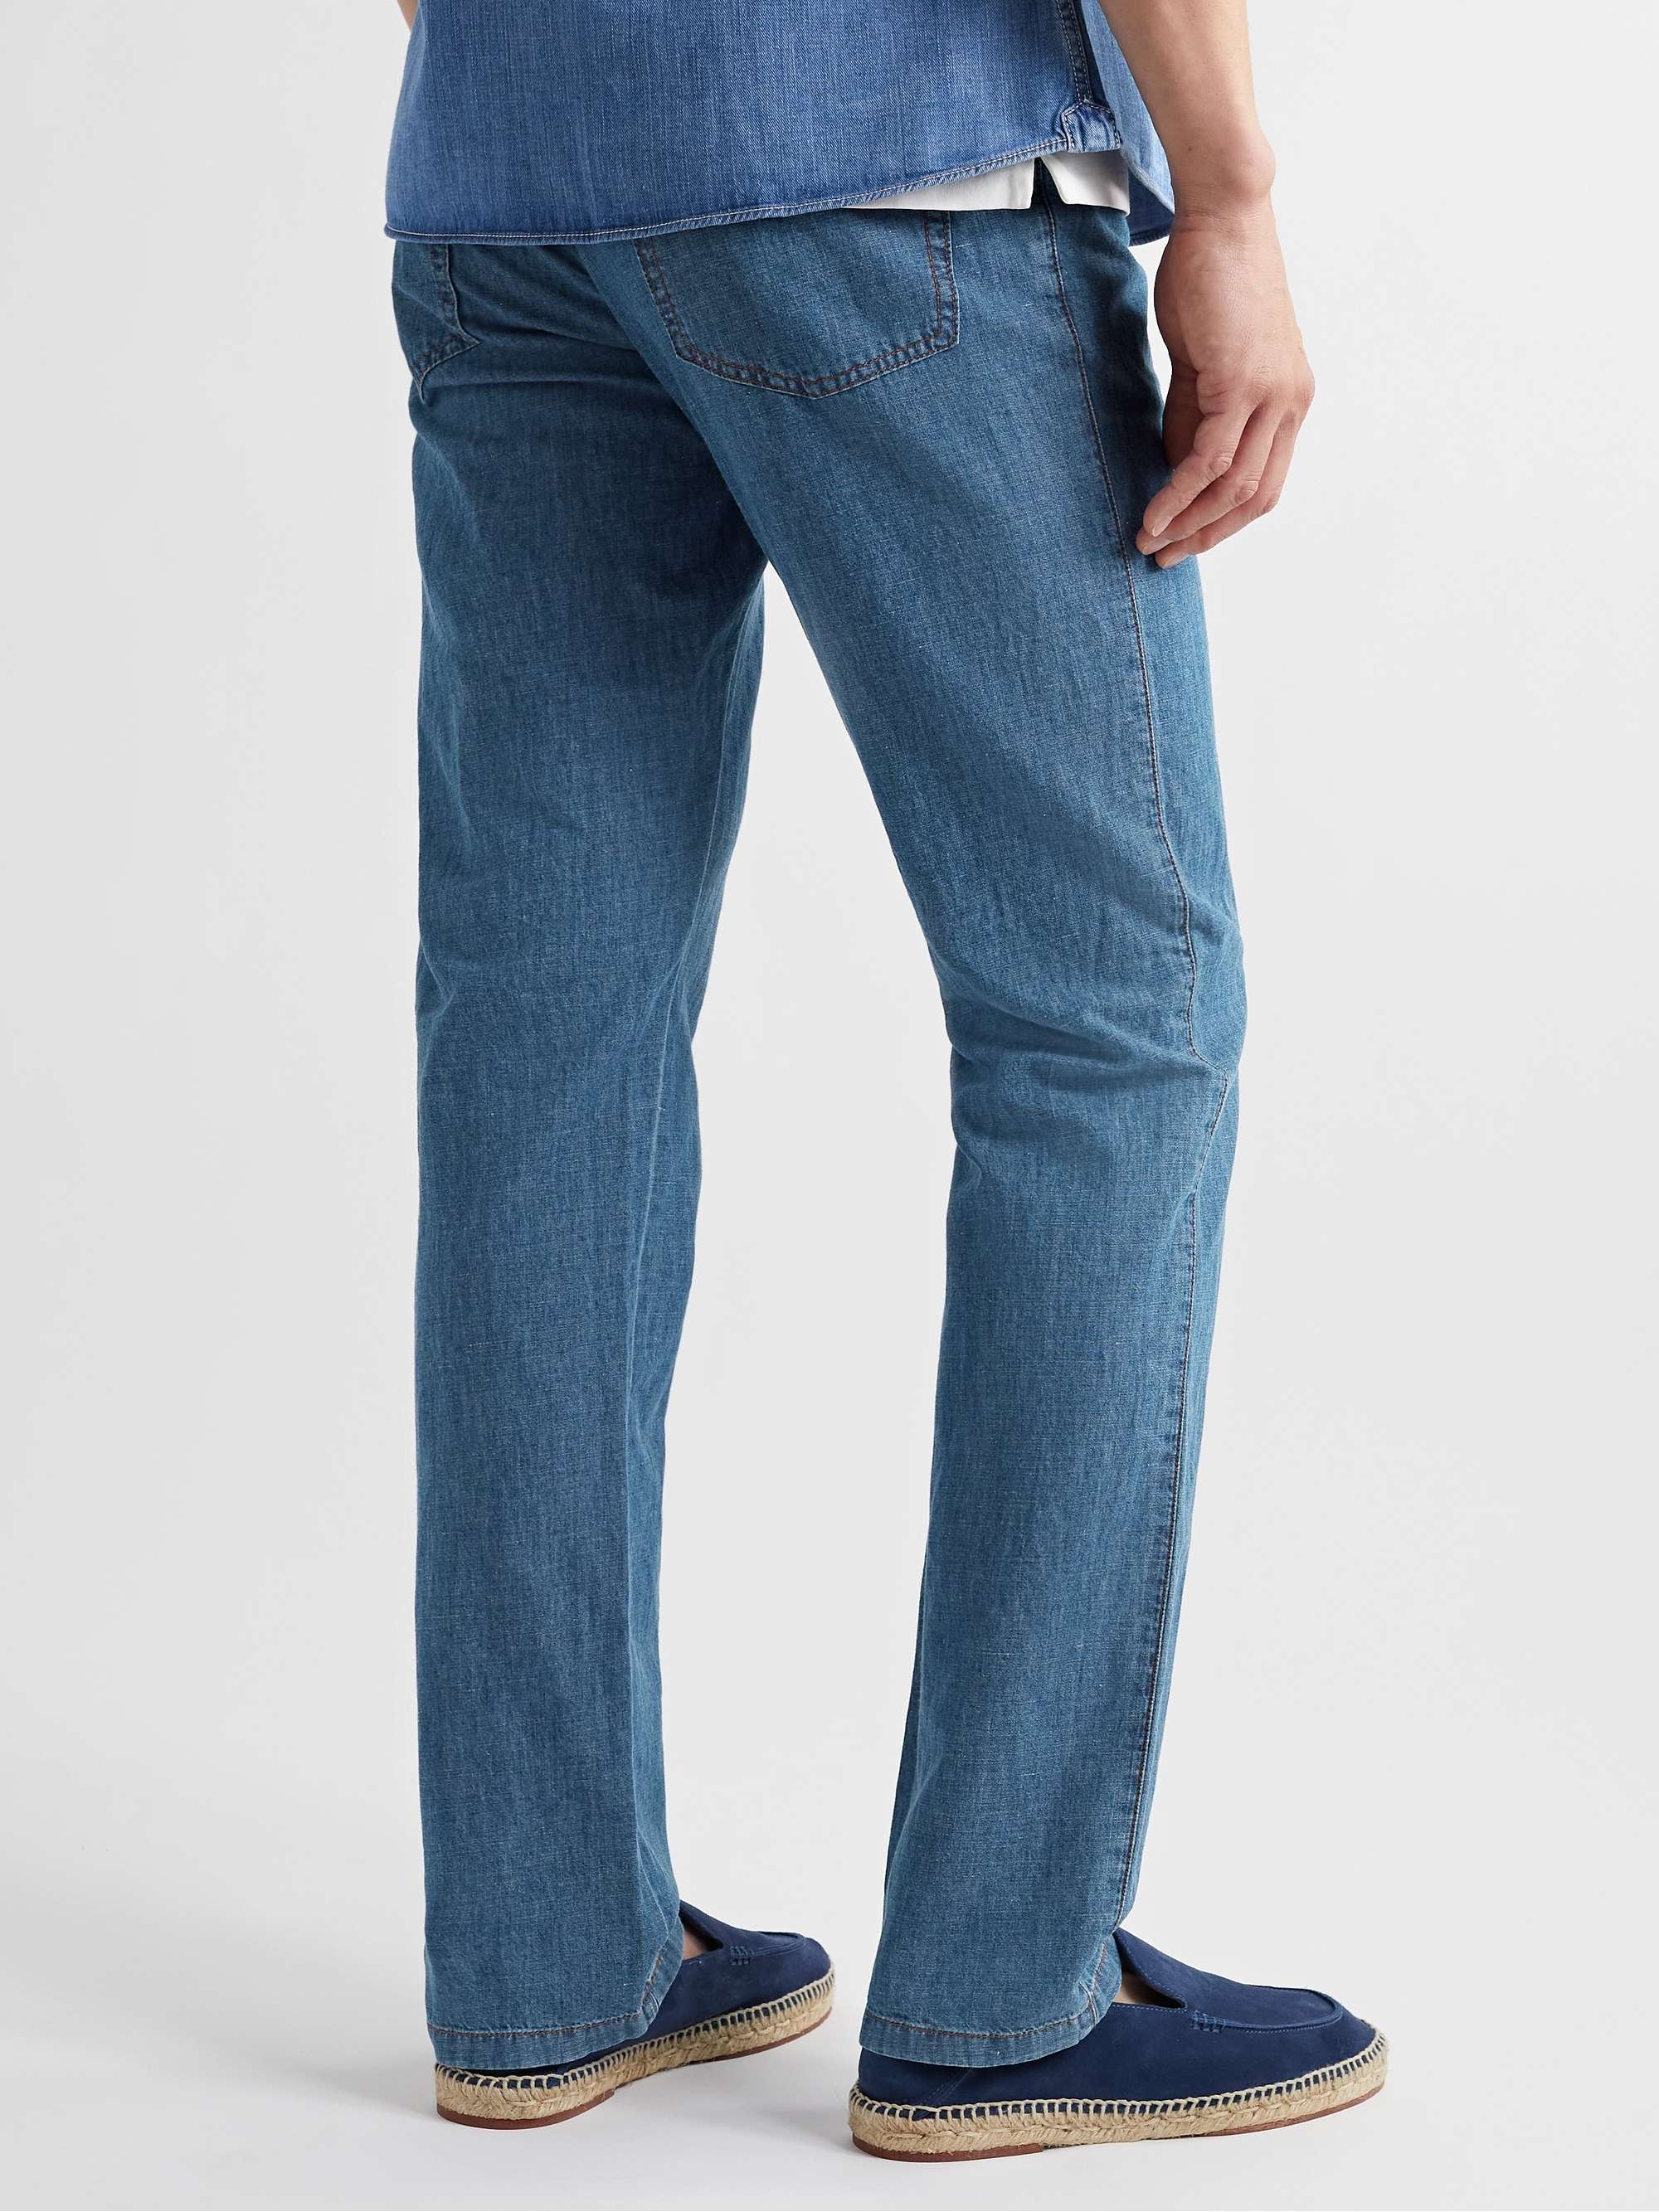 ZEGNA Straight-Leg Stone-Washed Jeans